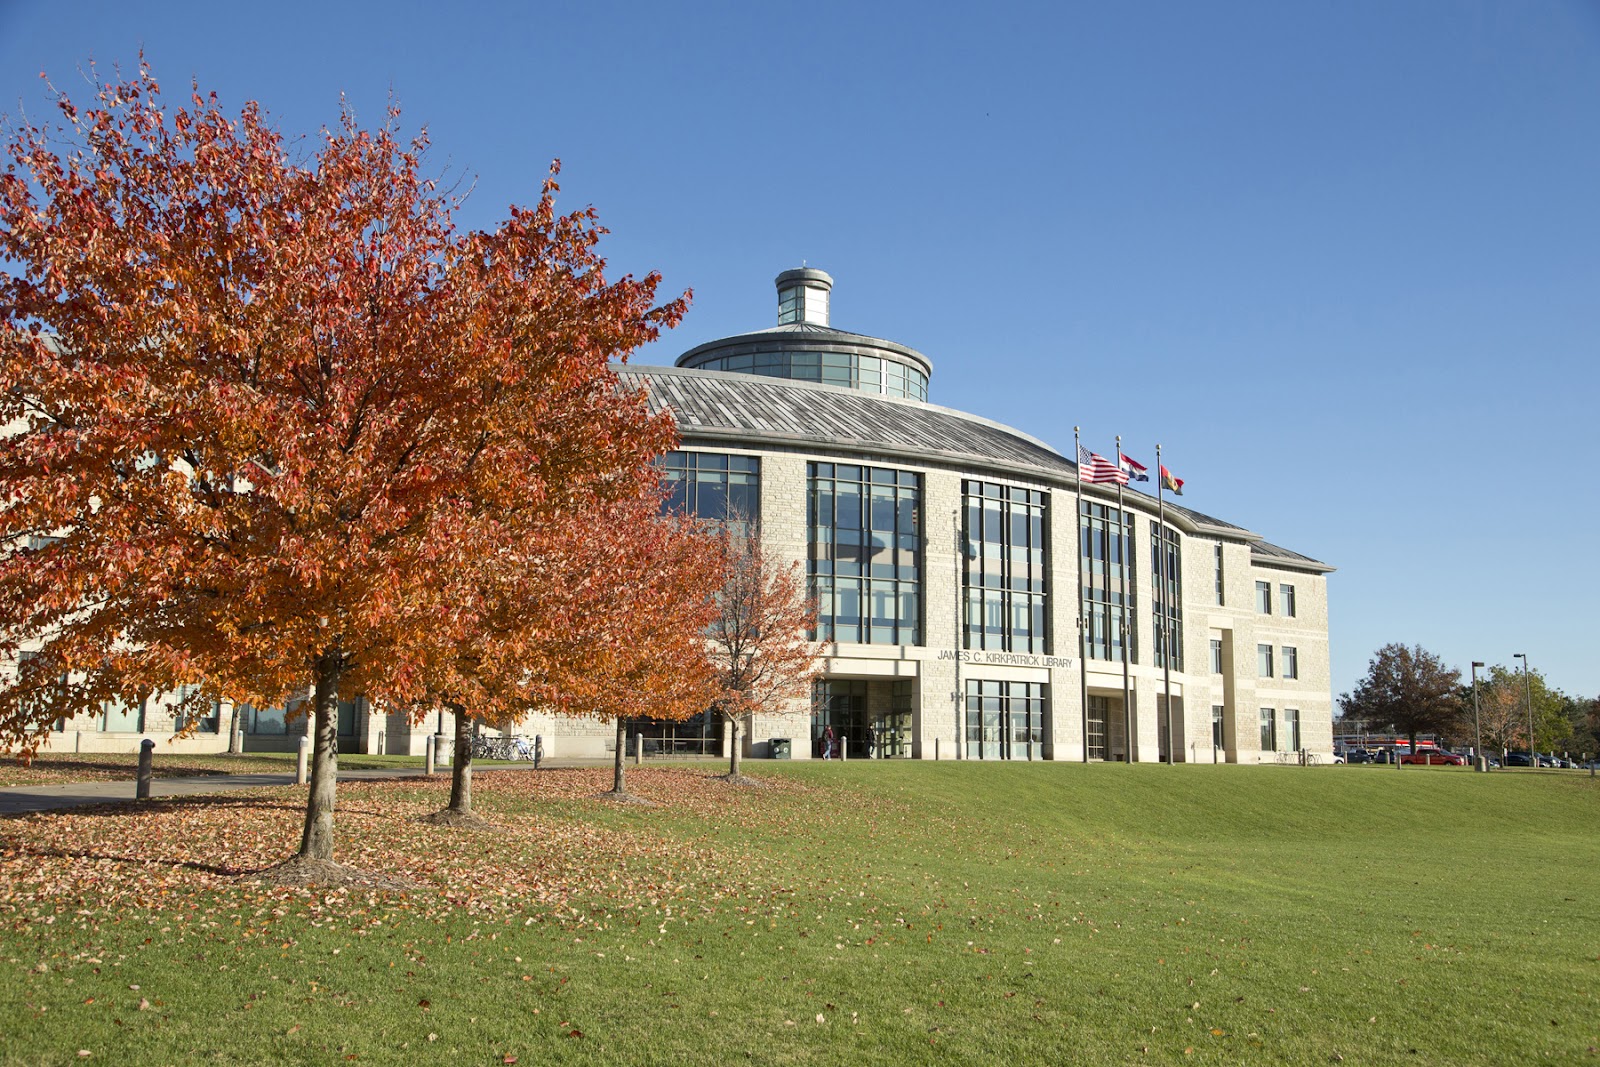 The University of Central Missouri